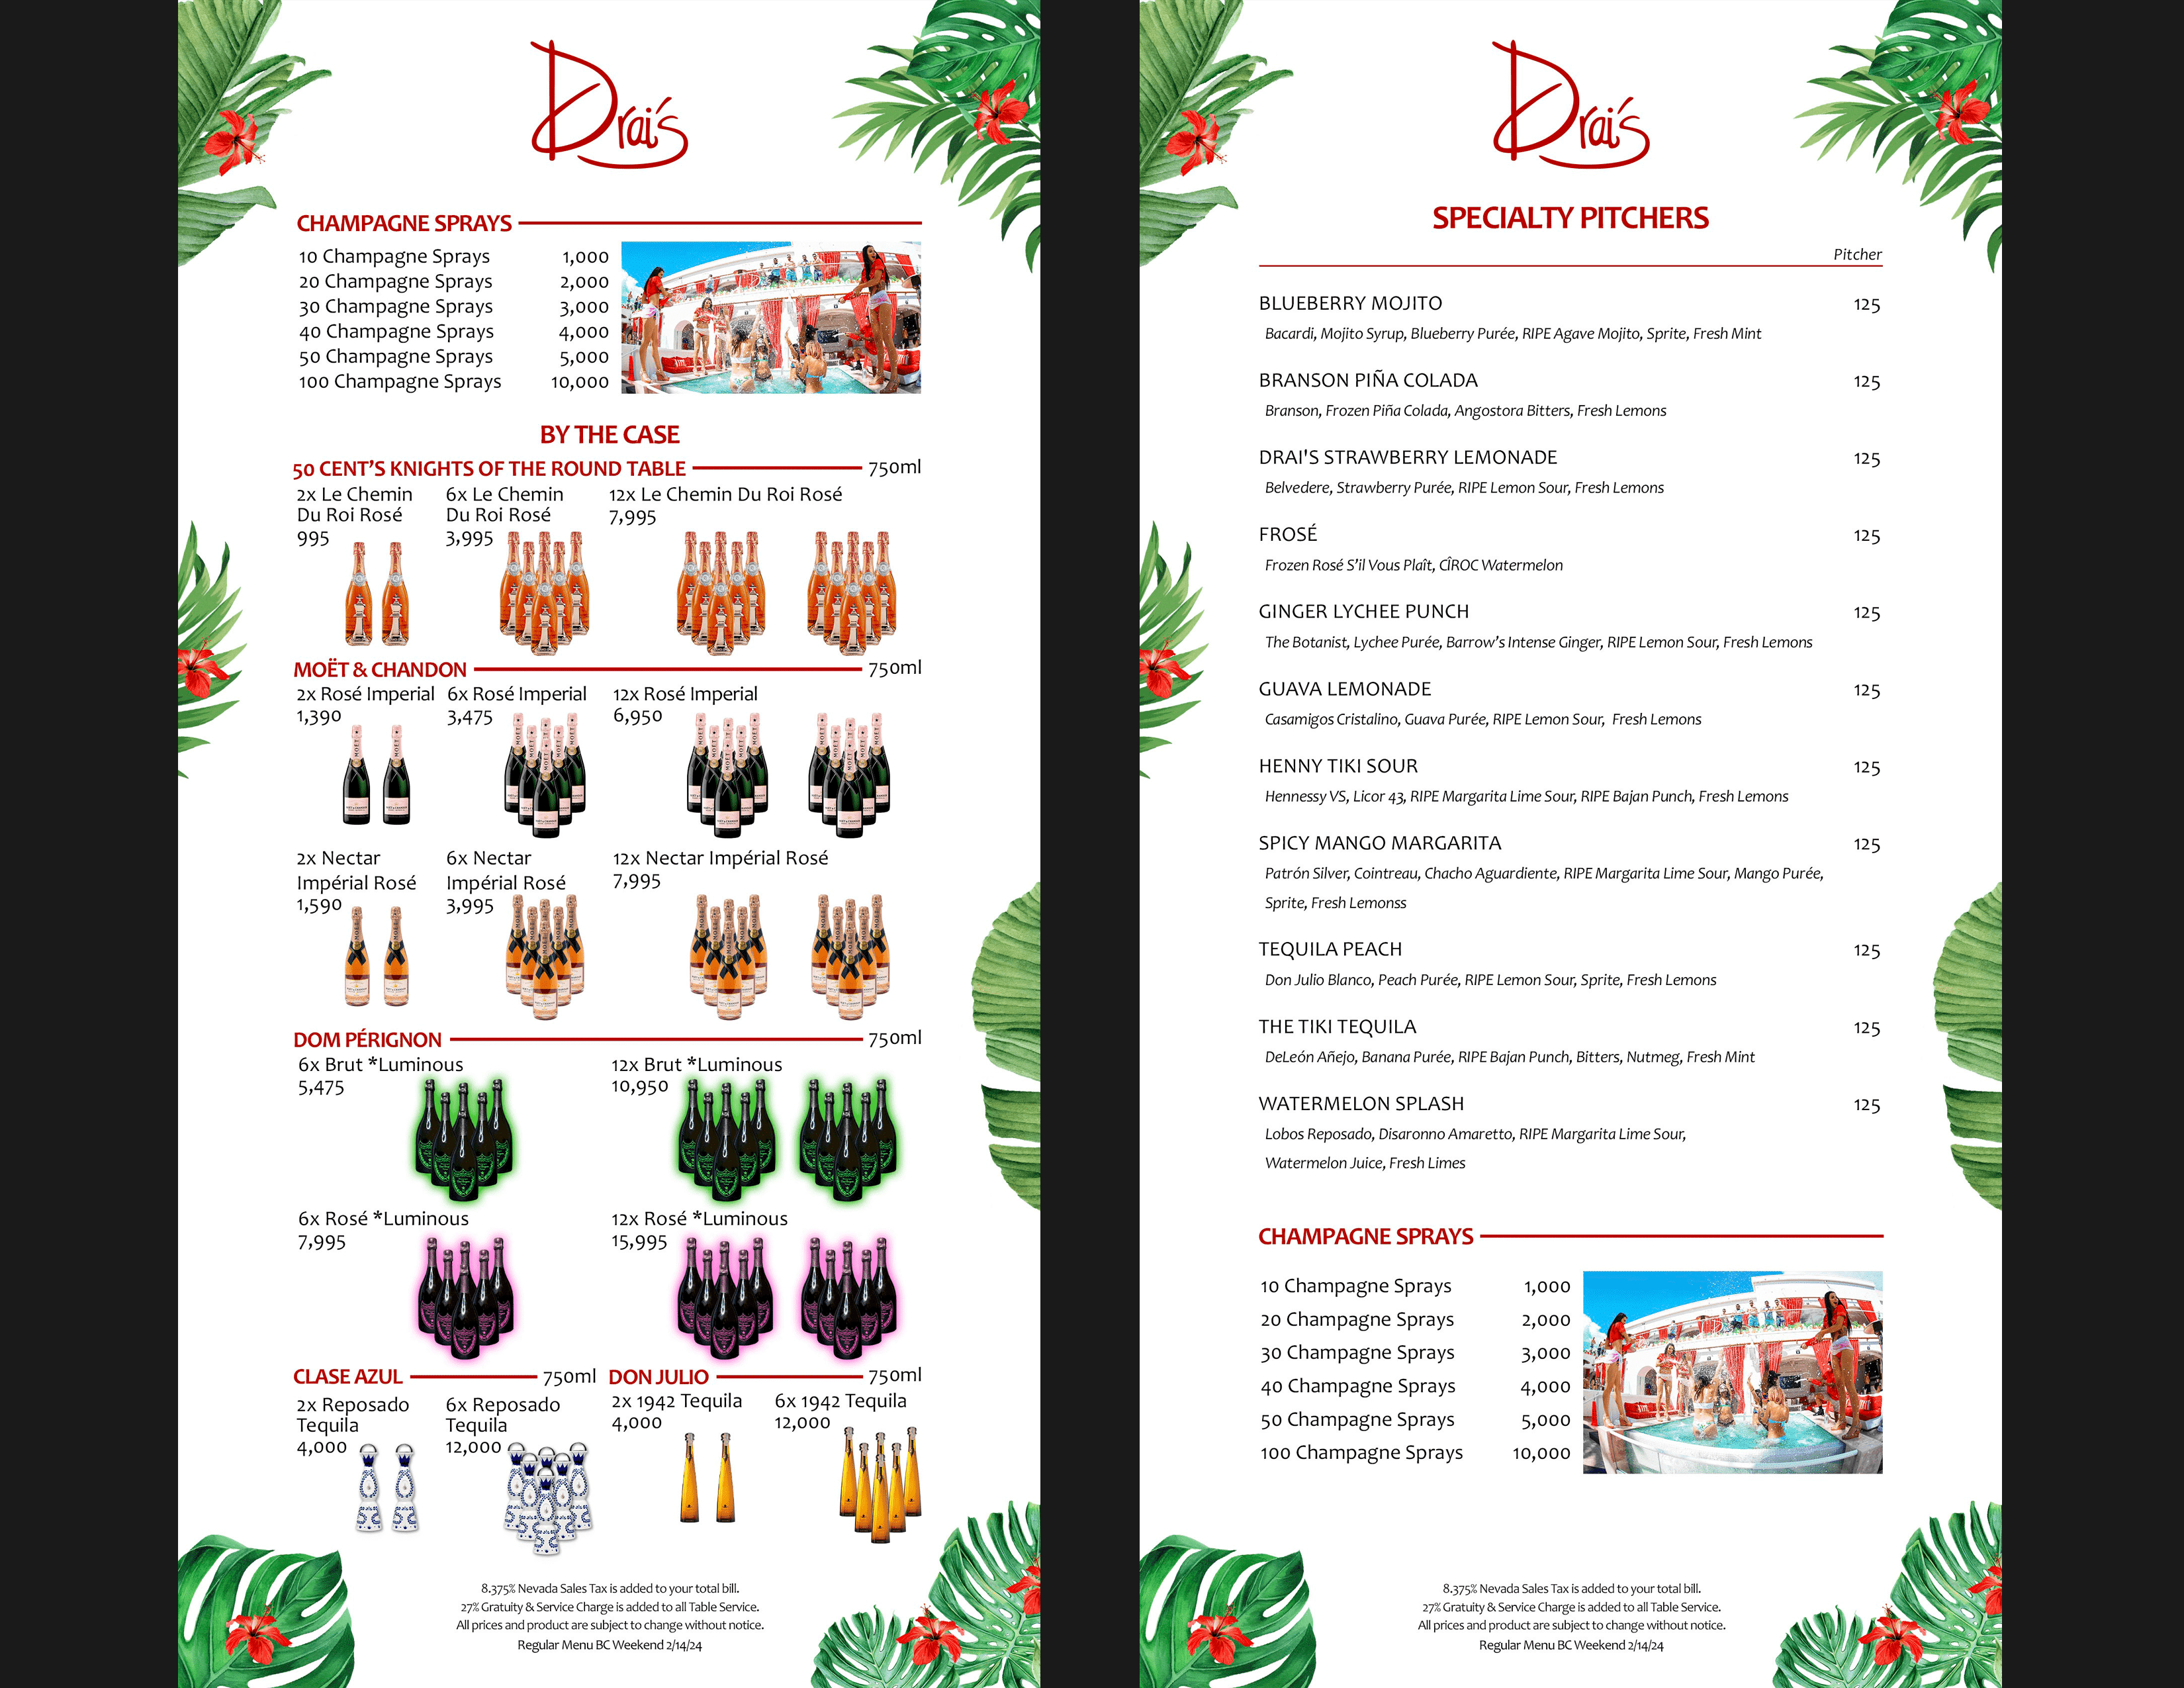 Drais beachclub bottle service menu